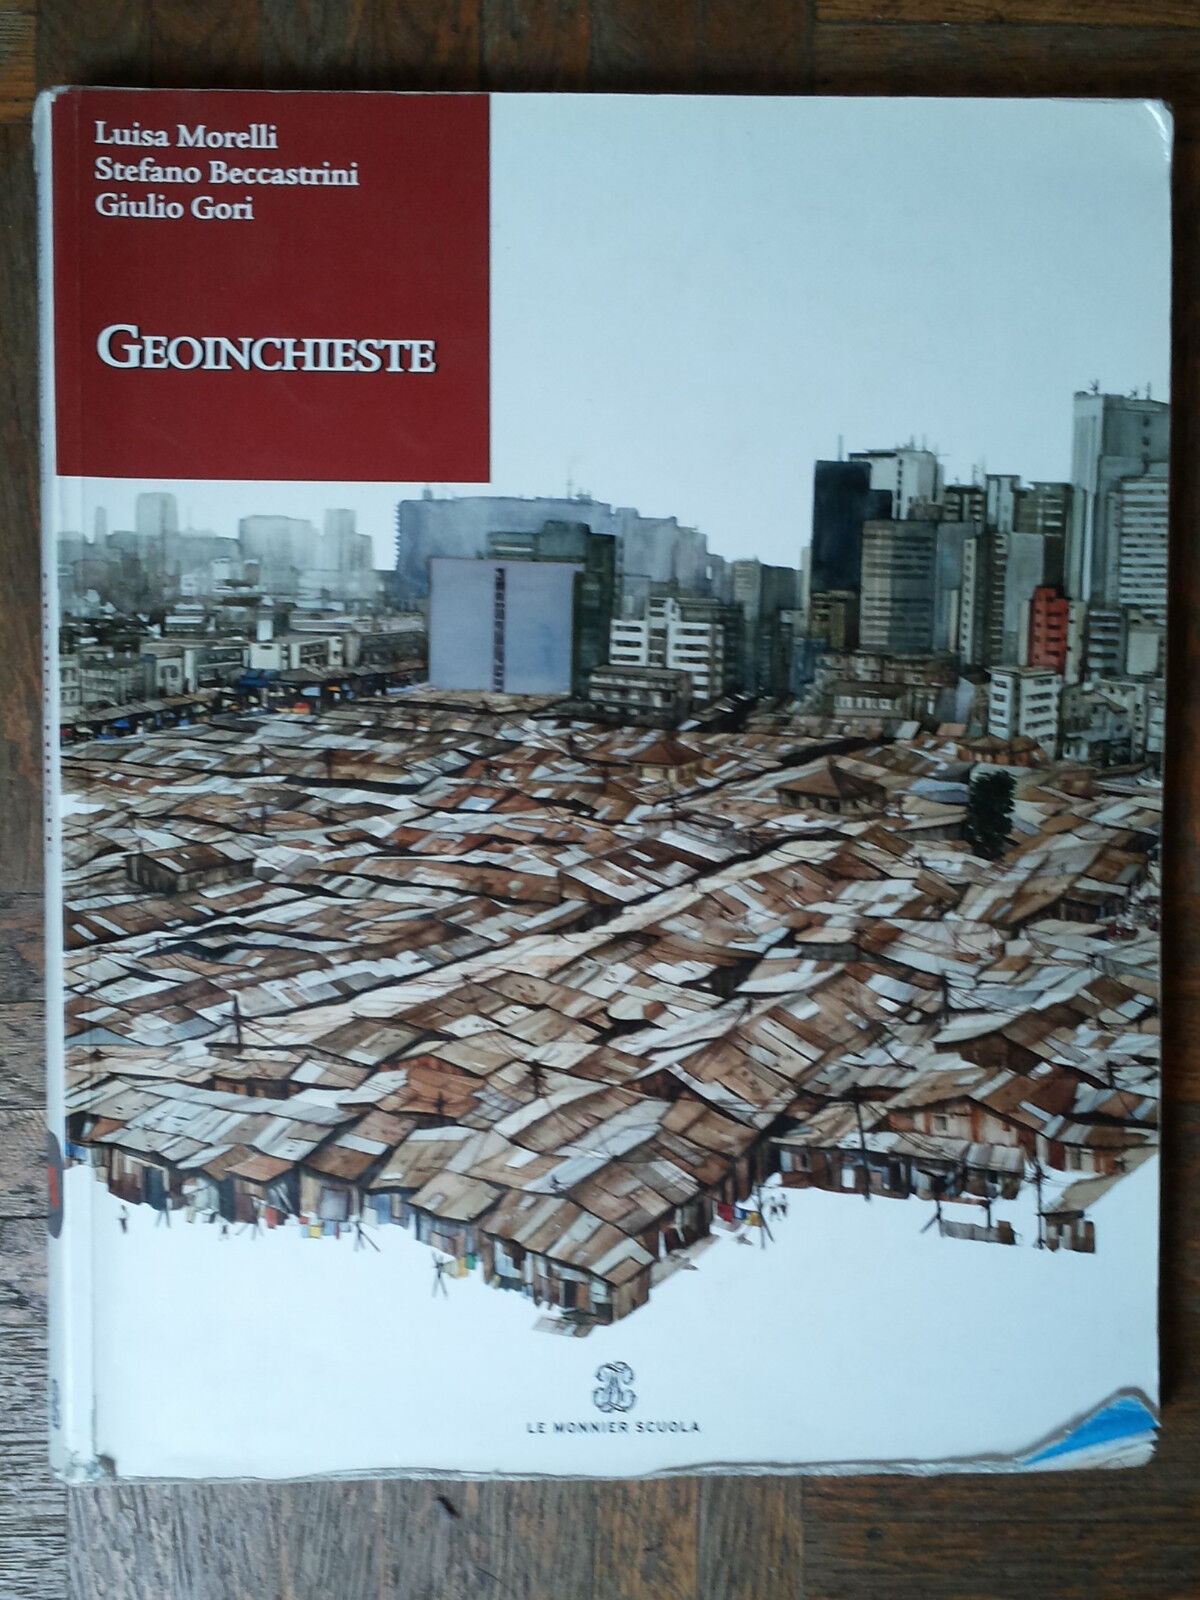 Geoinchieste - AA.VV. - Le Monnier Scuola,2009 - R